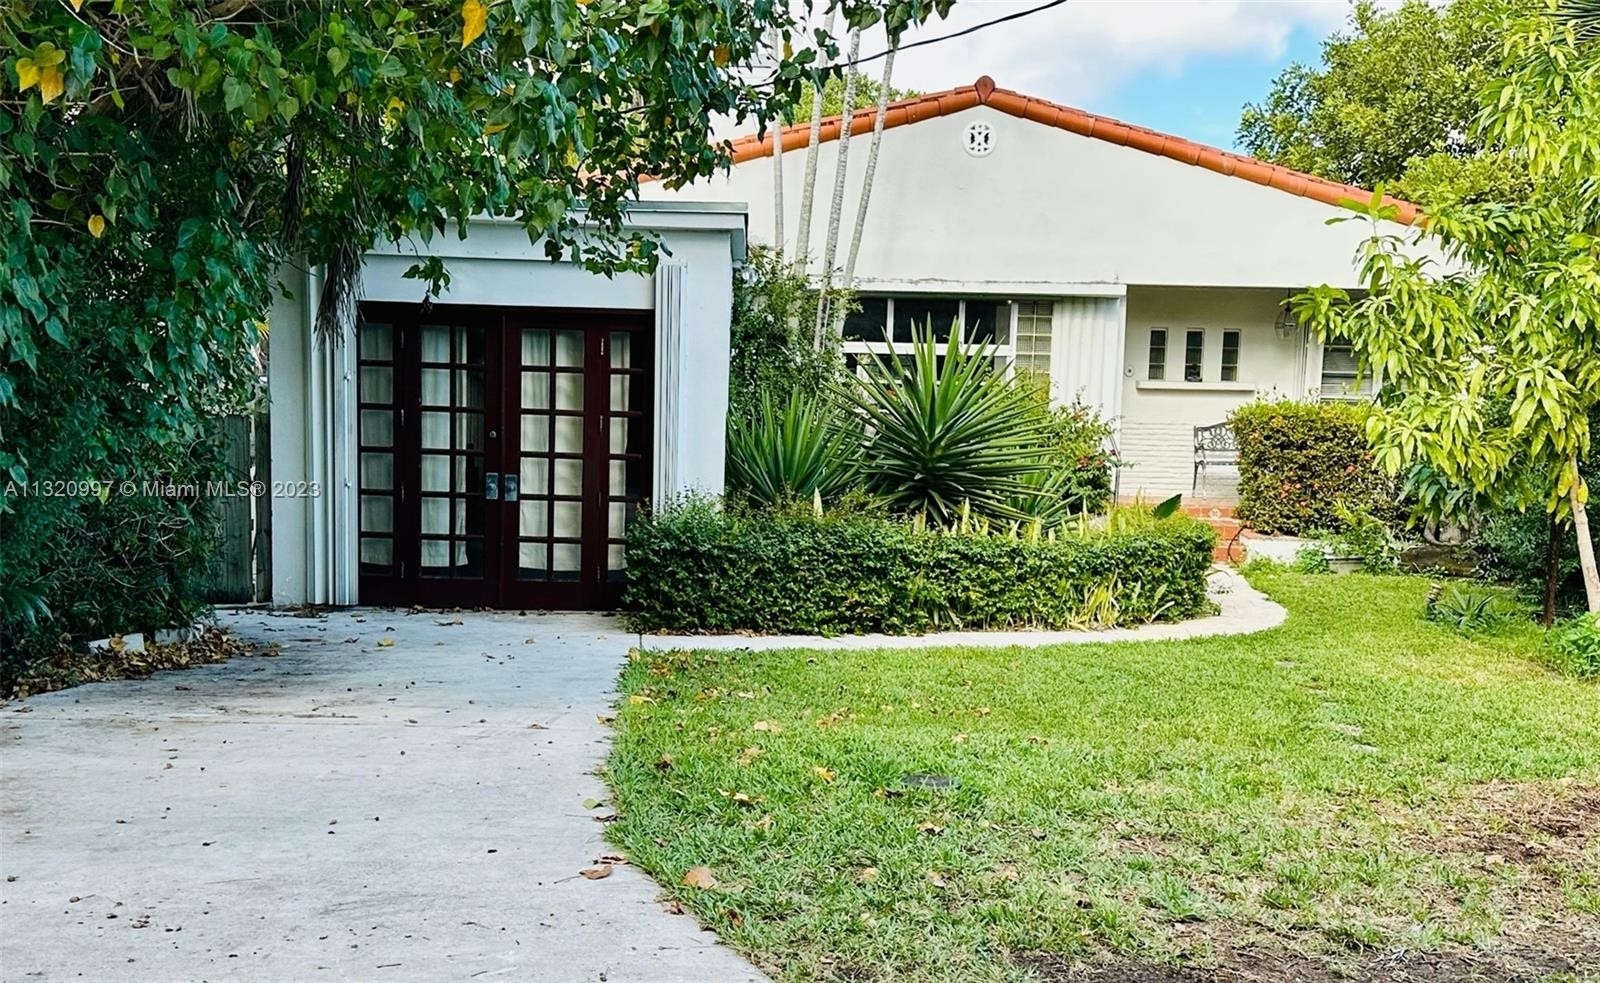 Single Family Home for Sale at Palm Island, Miami Beach, FL 33139